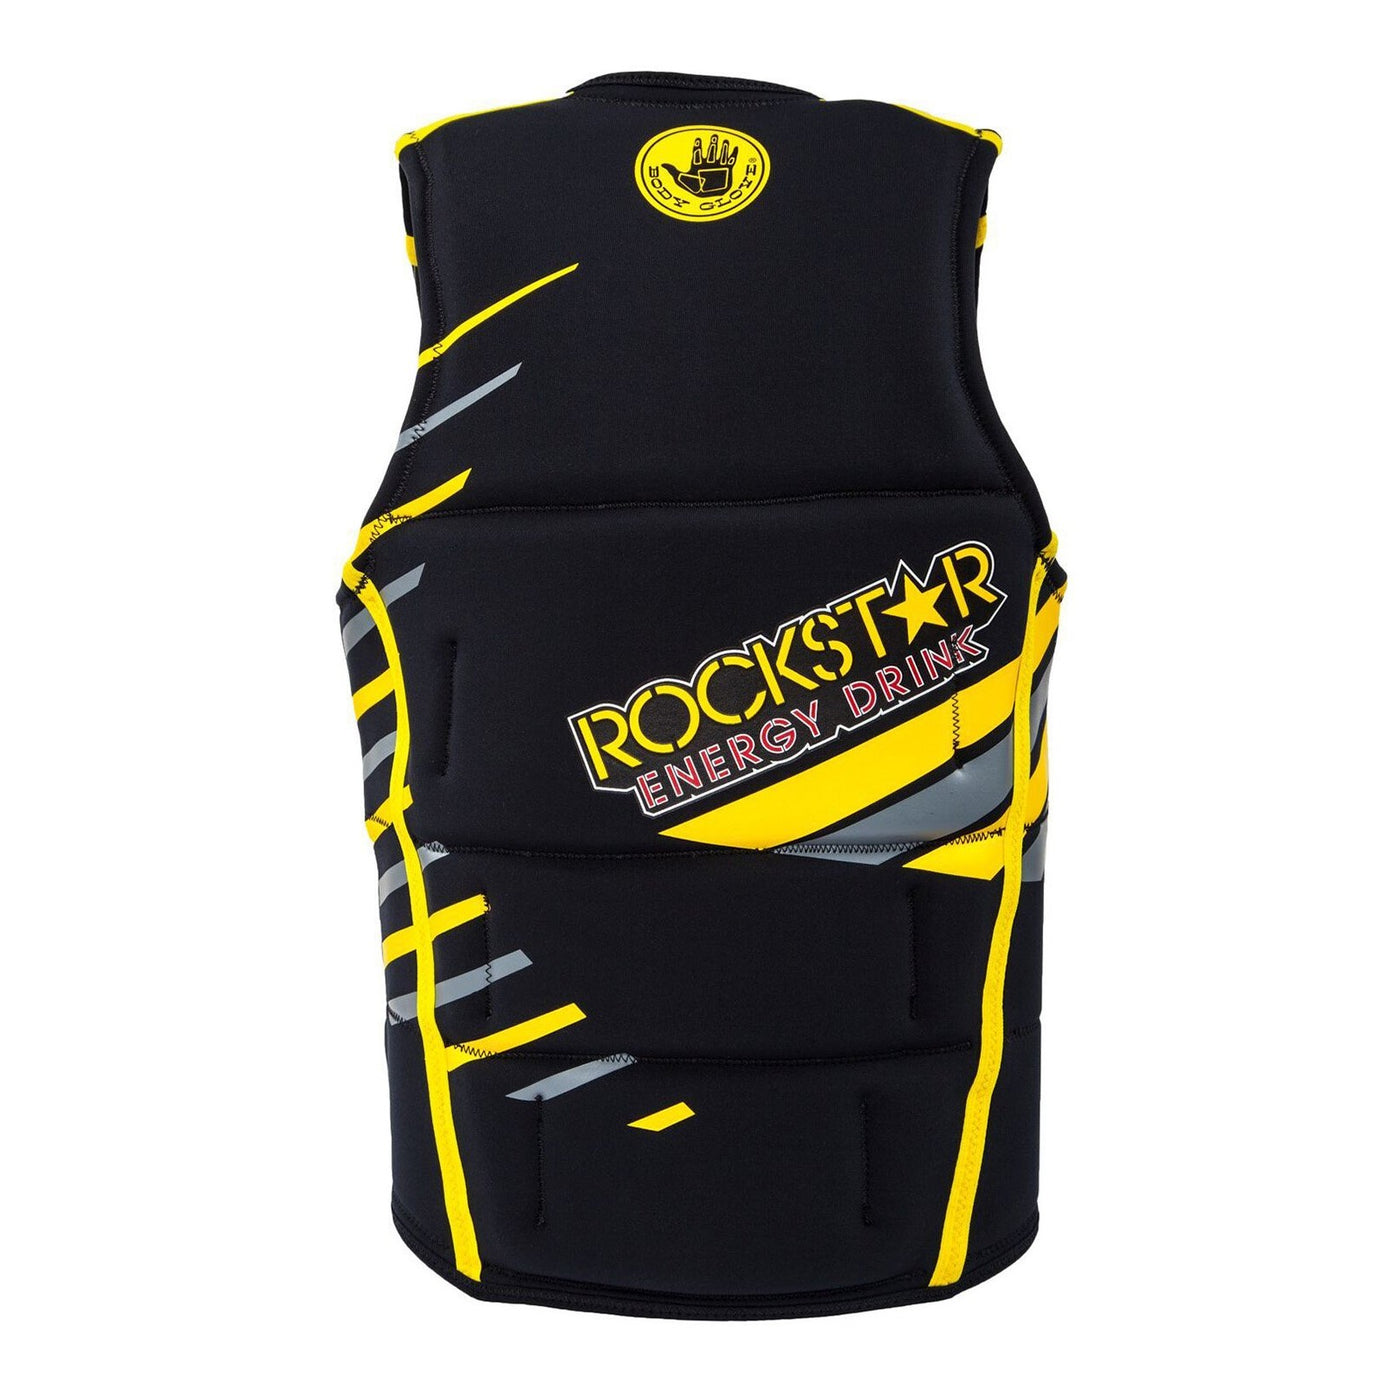 Body Glove Men's Rockstar Comp Vest